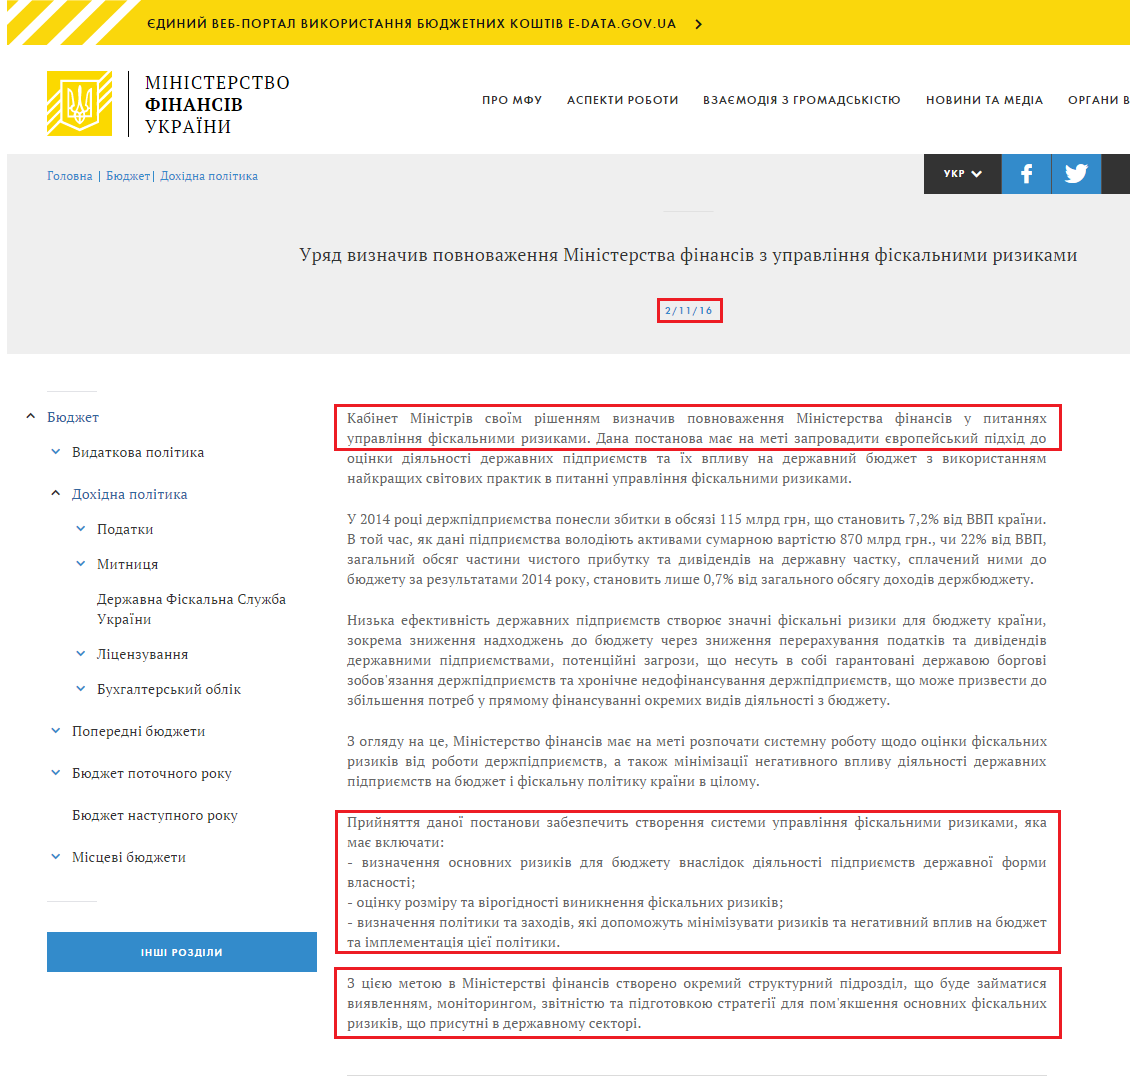 http://www.minfin.gov.ua/news/view/uriad-vyznachyv-povnovazhennia-ministerstva-finansiv-z-upravlinnia-fiskalnymy-ryzykamy?category=bjudzhet&subcategory=dohidna-politika